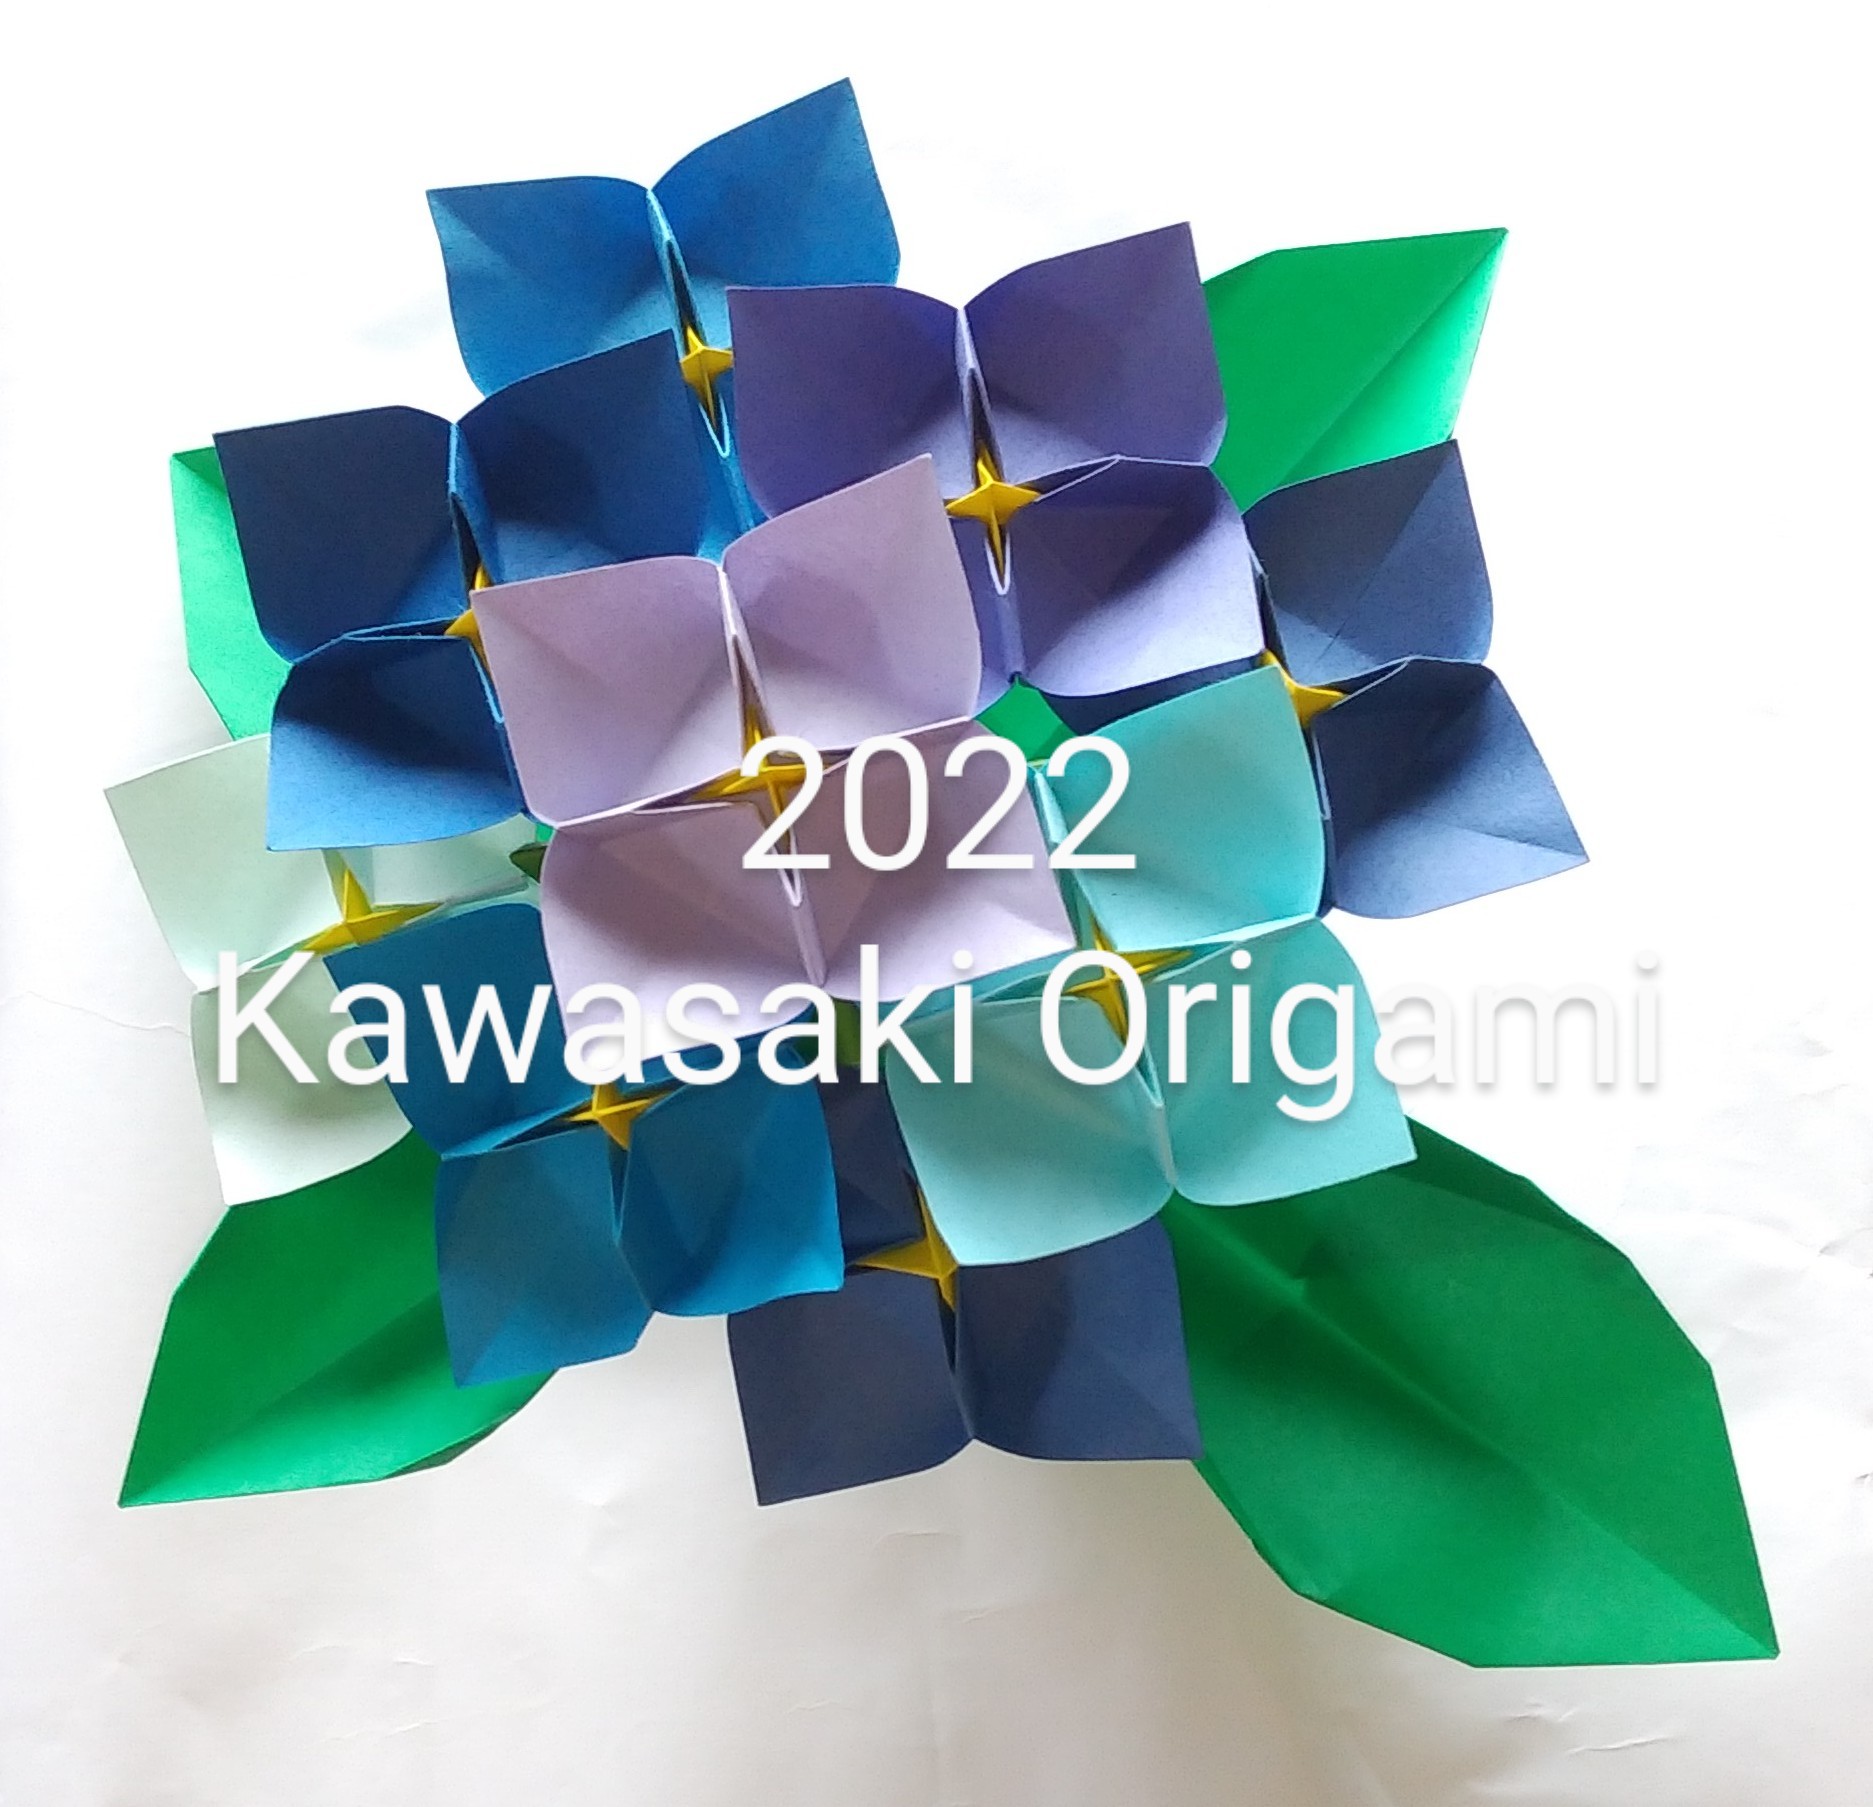 2022/06/15(Wed) 15:15「華やかな紫陽花」川崎敏和
（創作者 Author：川崎敏和,　製作者 Folder：川崎敏和,　出典 Source：2022折り紙キット）
 スッキリした折り紙らしい造形です。